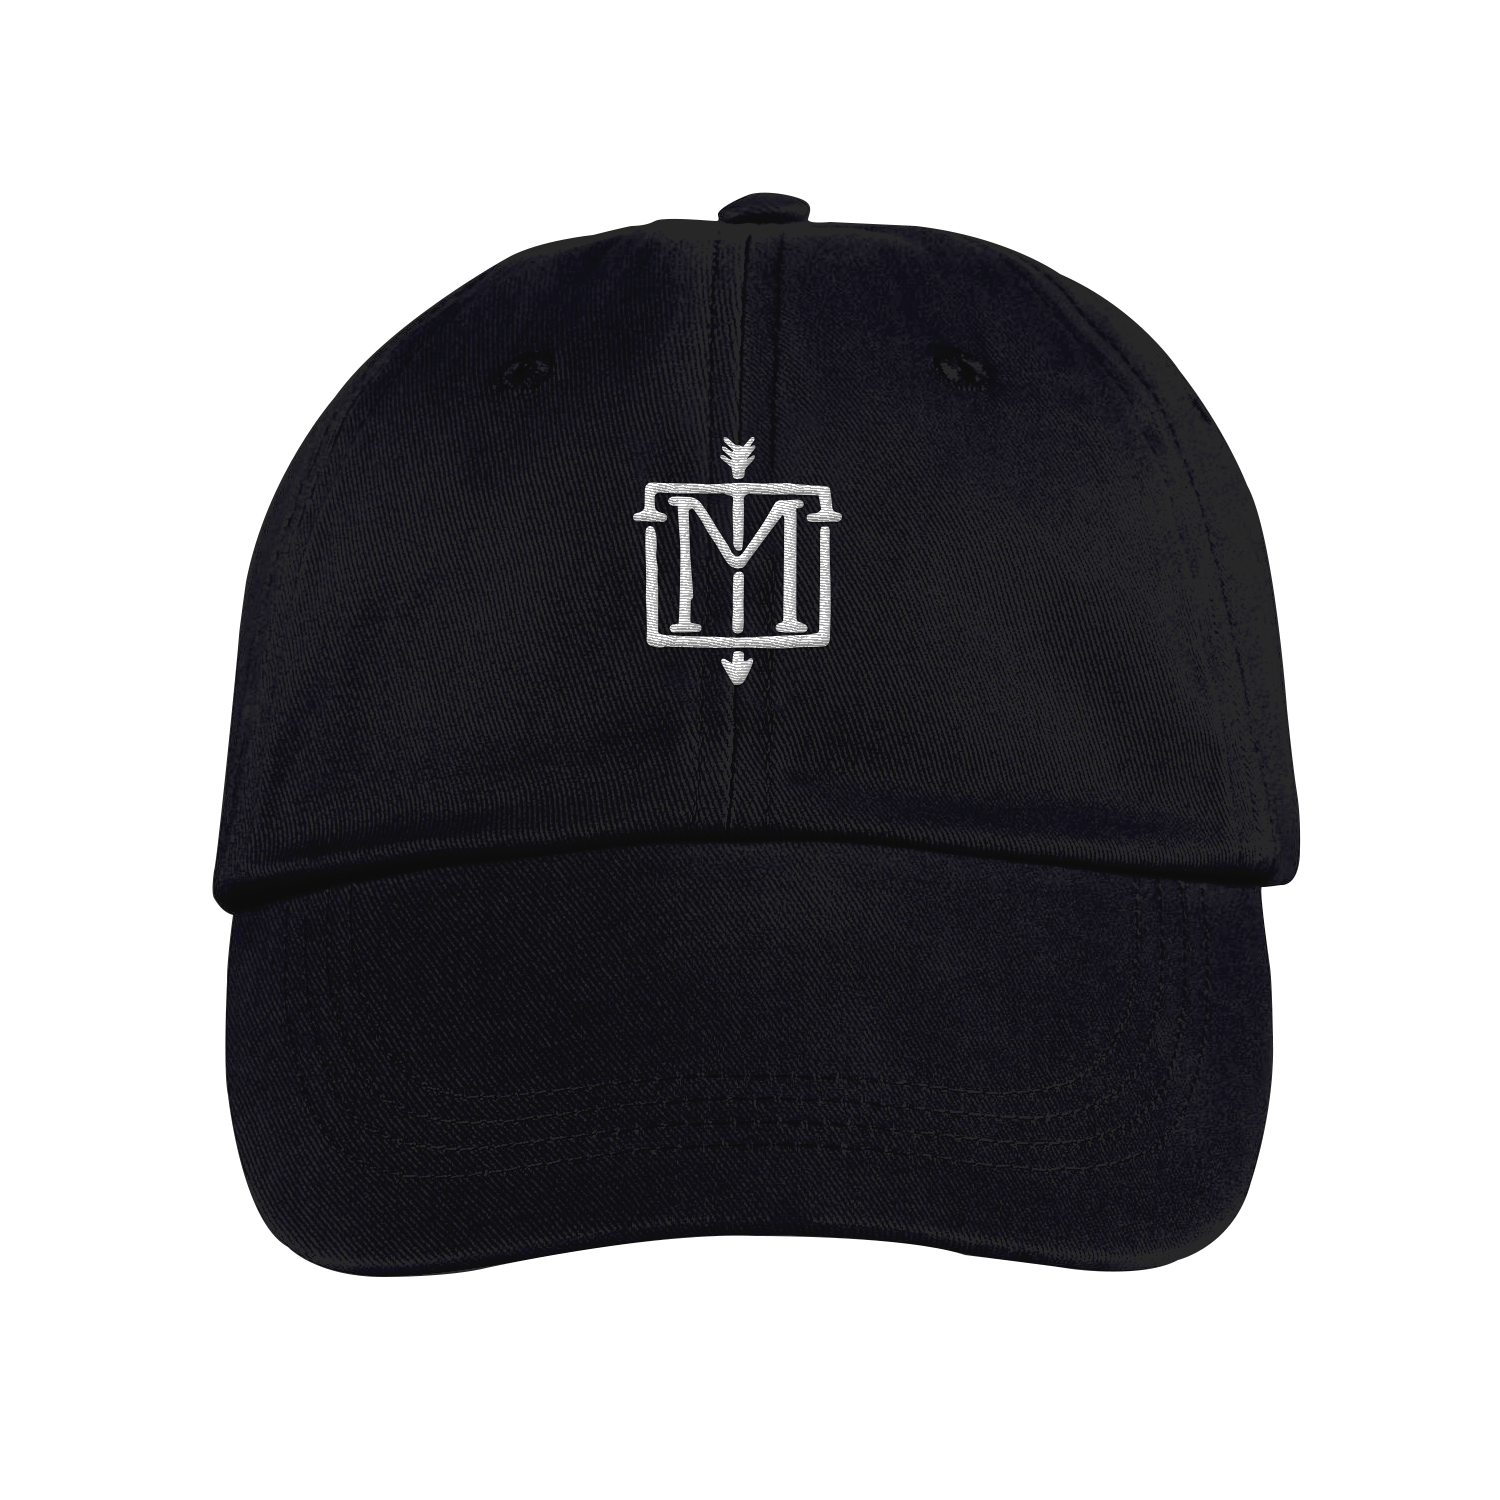 M Emblem Black Dad Hat